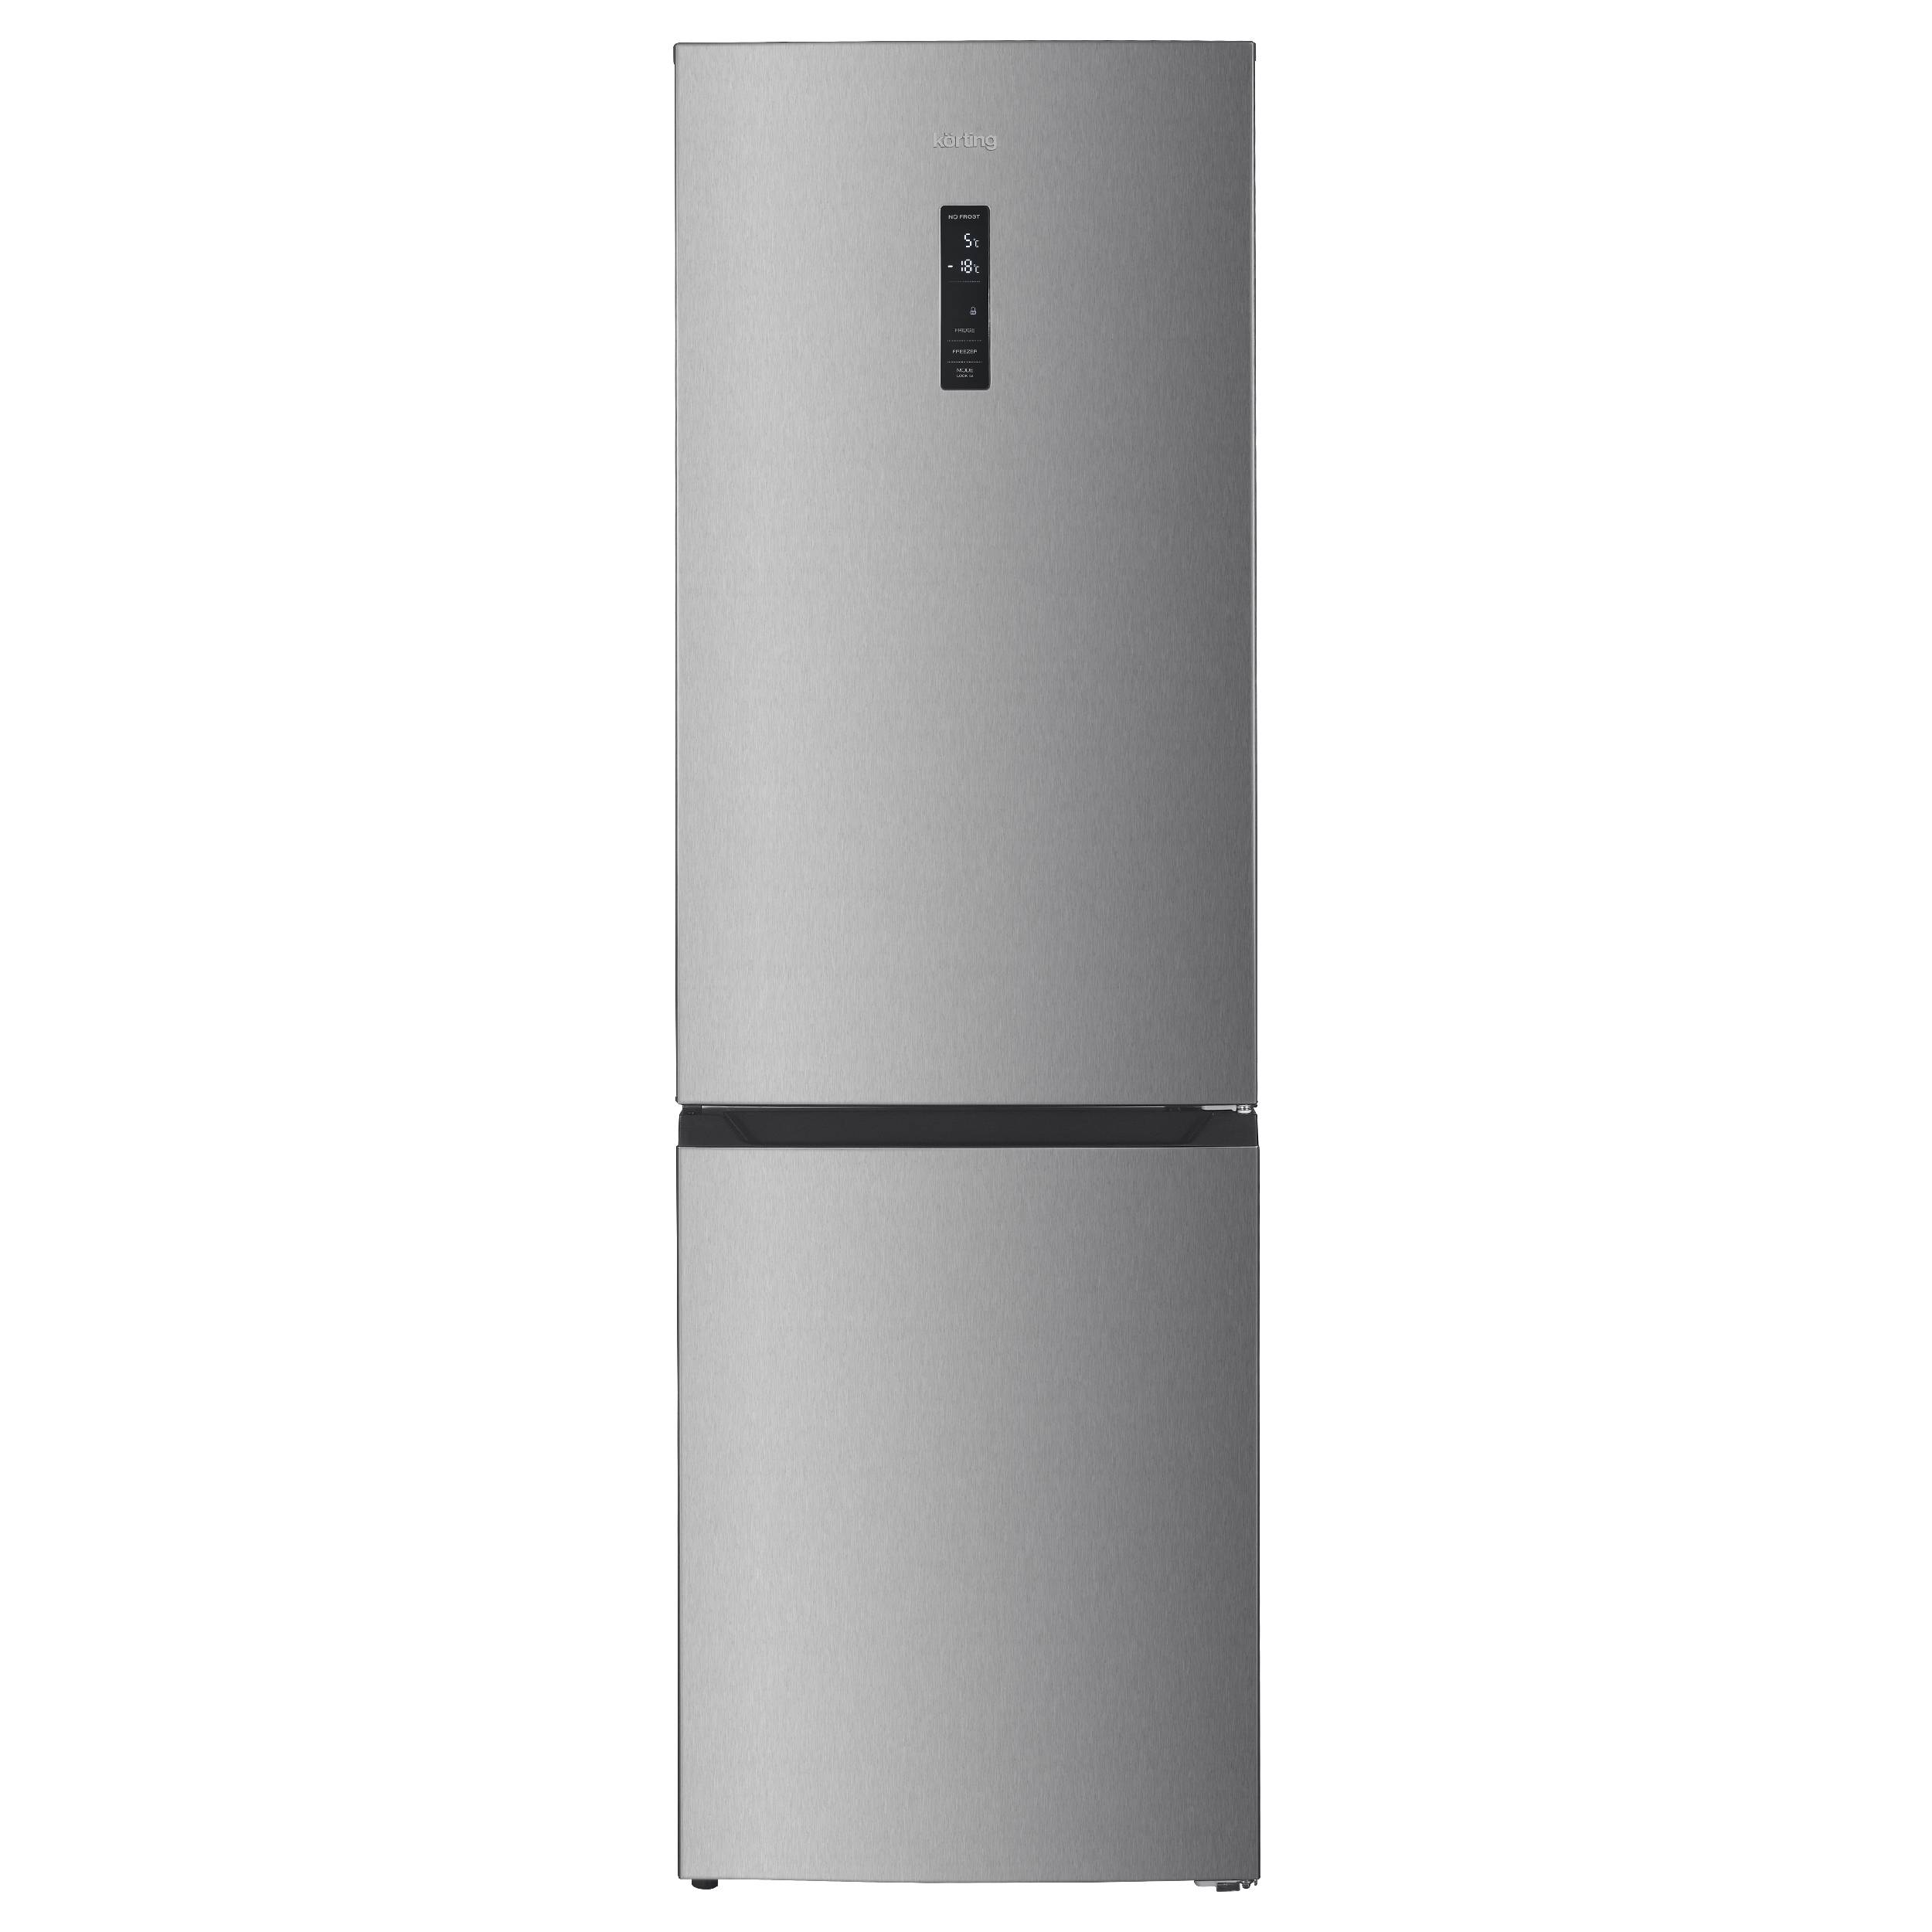 Холодильник Korting KNFC 62980 X серебристый, серый холодильник schaub lorenz slu x495d4ei серебристый серый